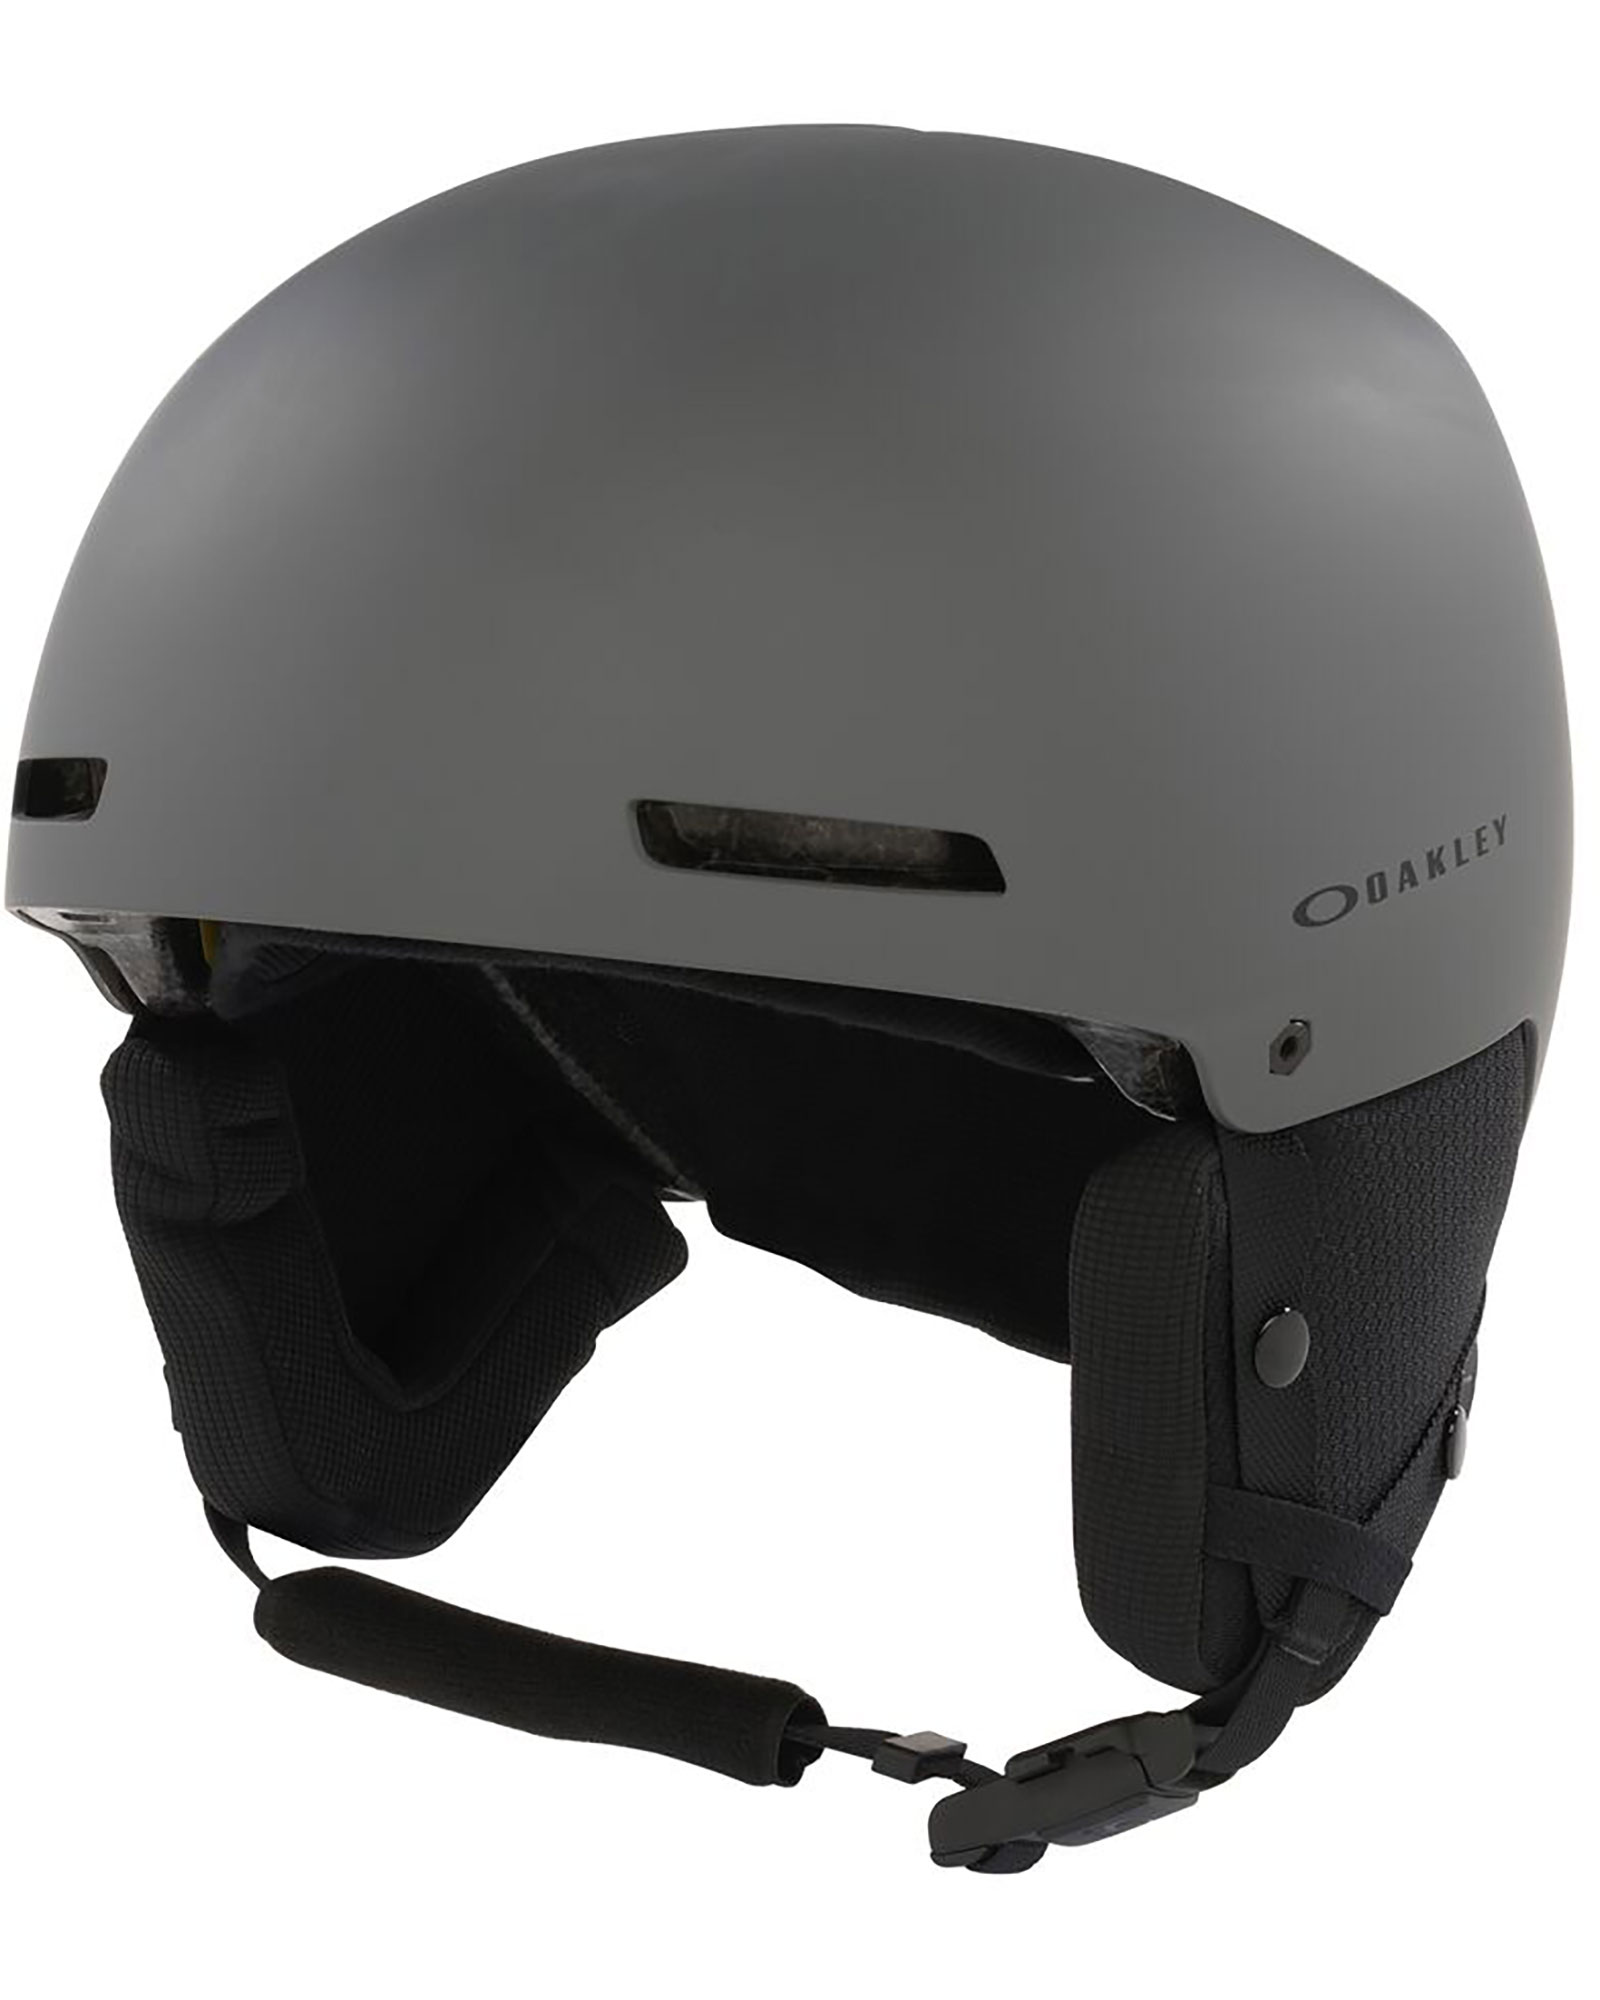 Oakley MOD1 Pro Helmet - Forged Iron XL